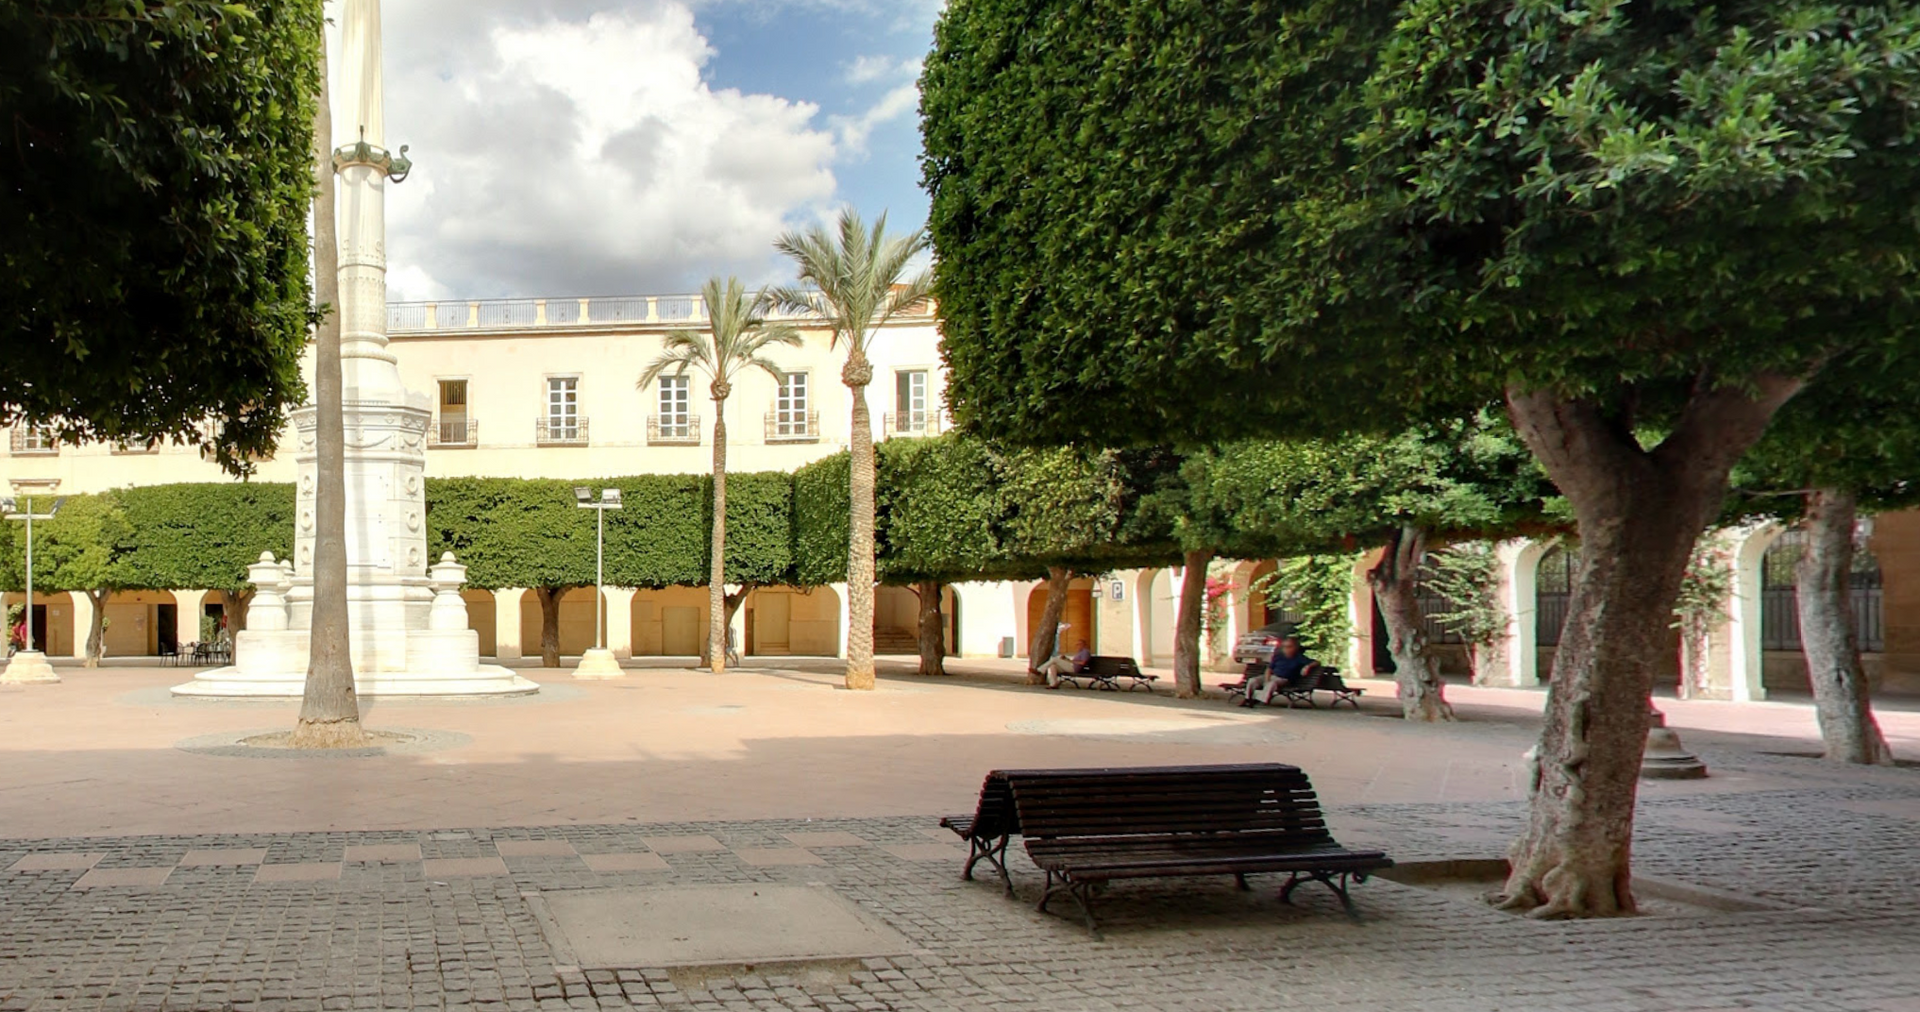 Heritage Interpretation Center of Almeria by Google Earth